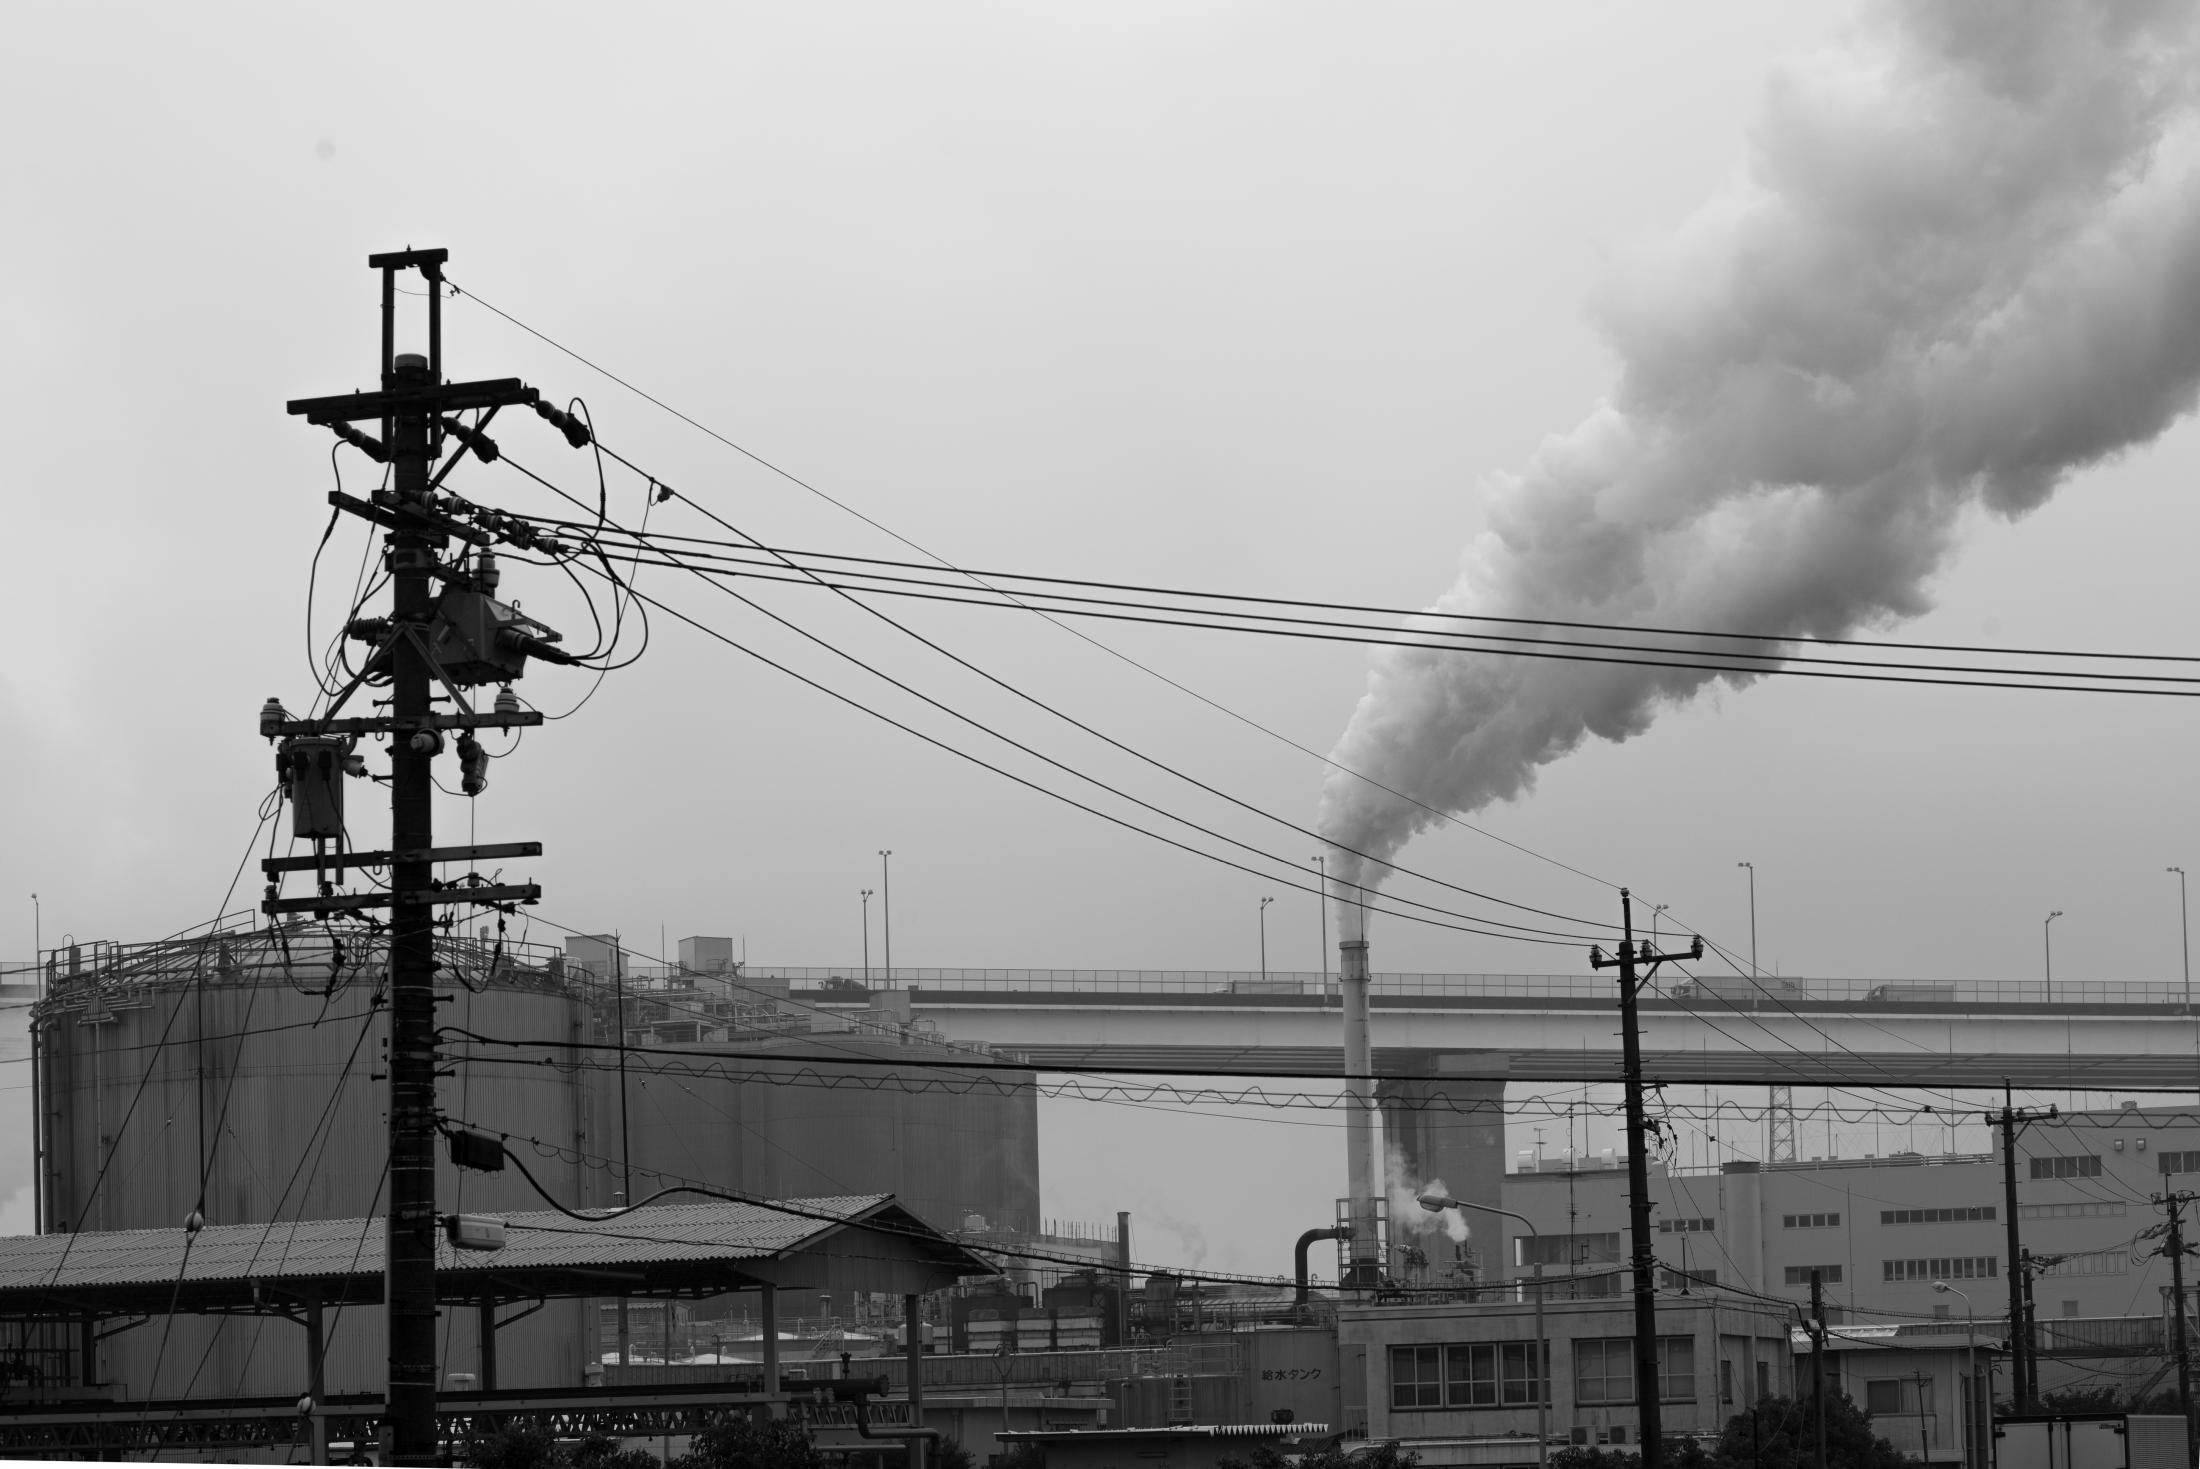 Nagoya Harbour ... Grey, Smoky, Apart  - 